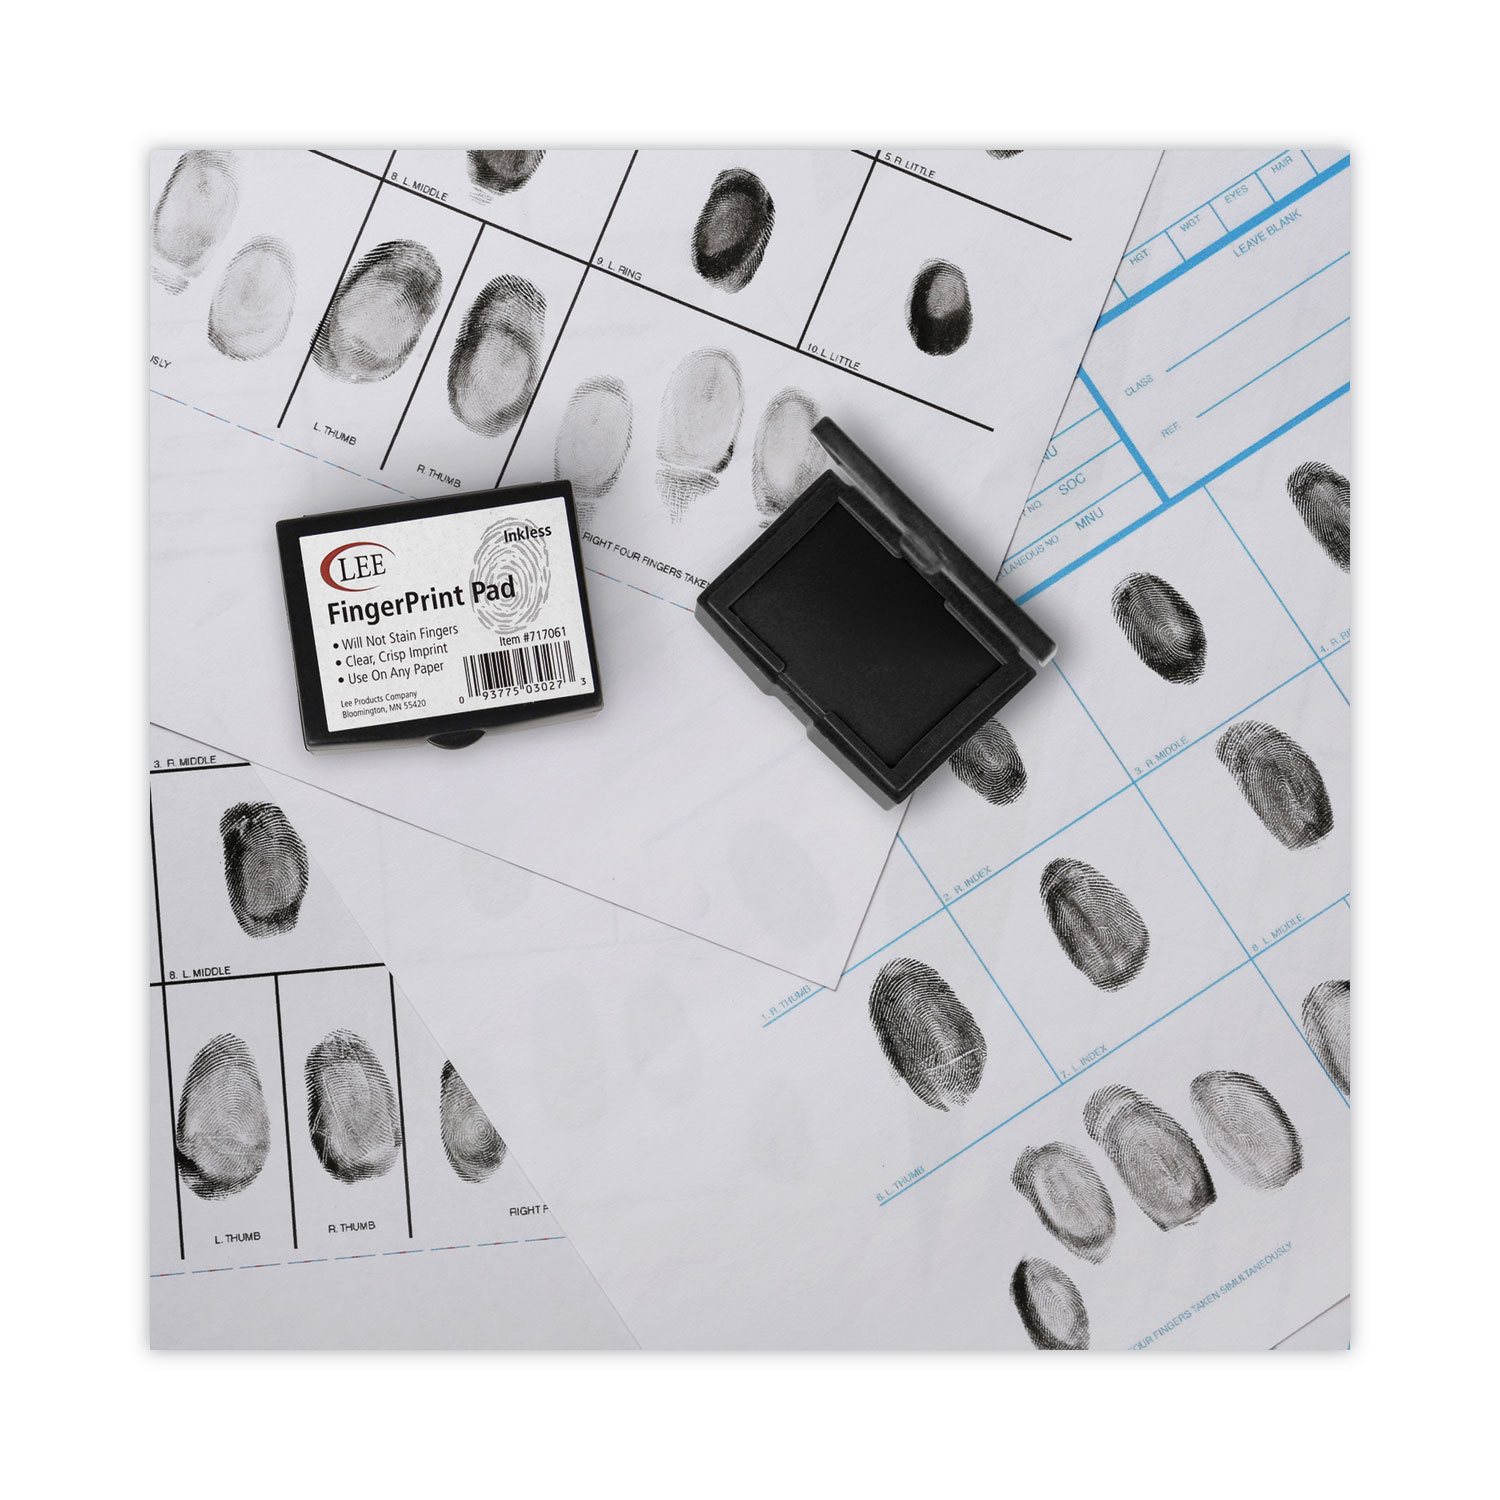 1 New DARK Inkless Fingerprint Pad NotaryPawnLaw UseNotary 2.5 x 4 in 